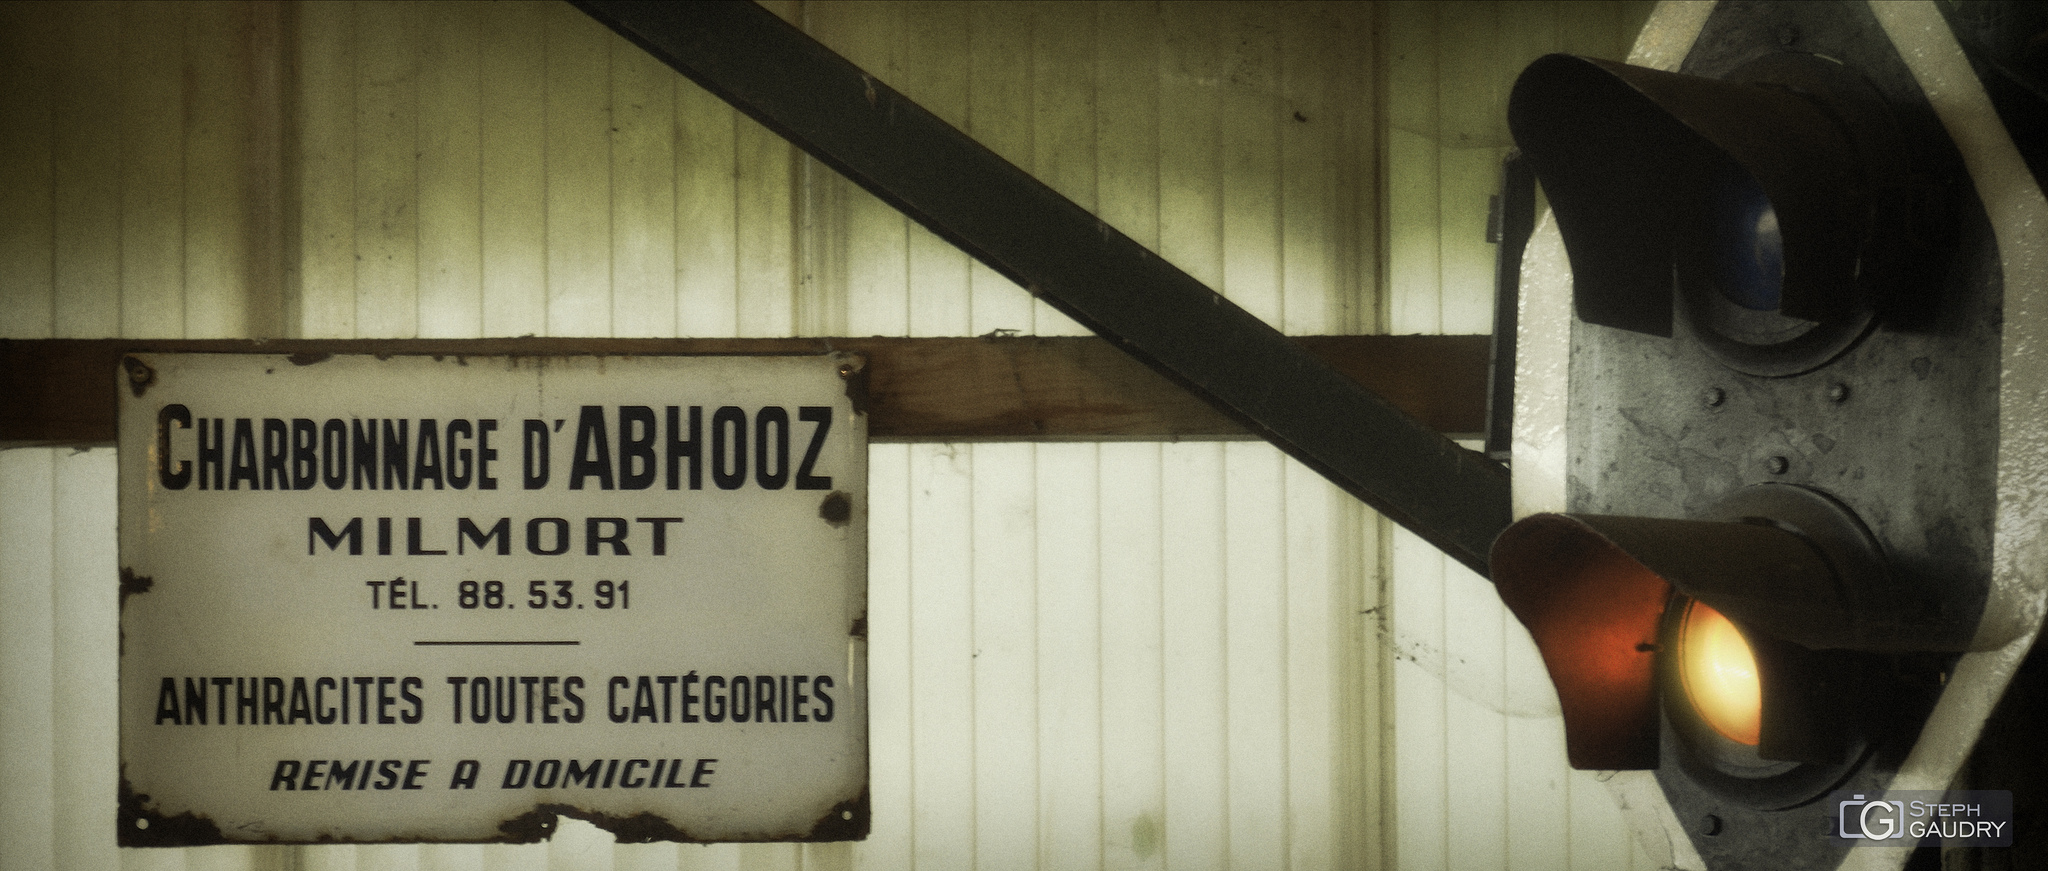 Charbonnage d'Abhooz - Milmort [Click to start slideshow]